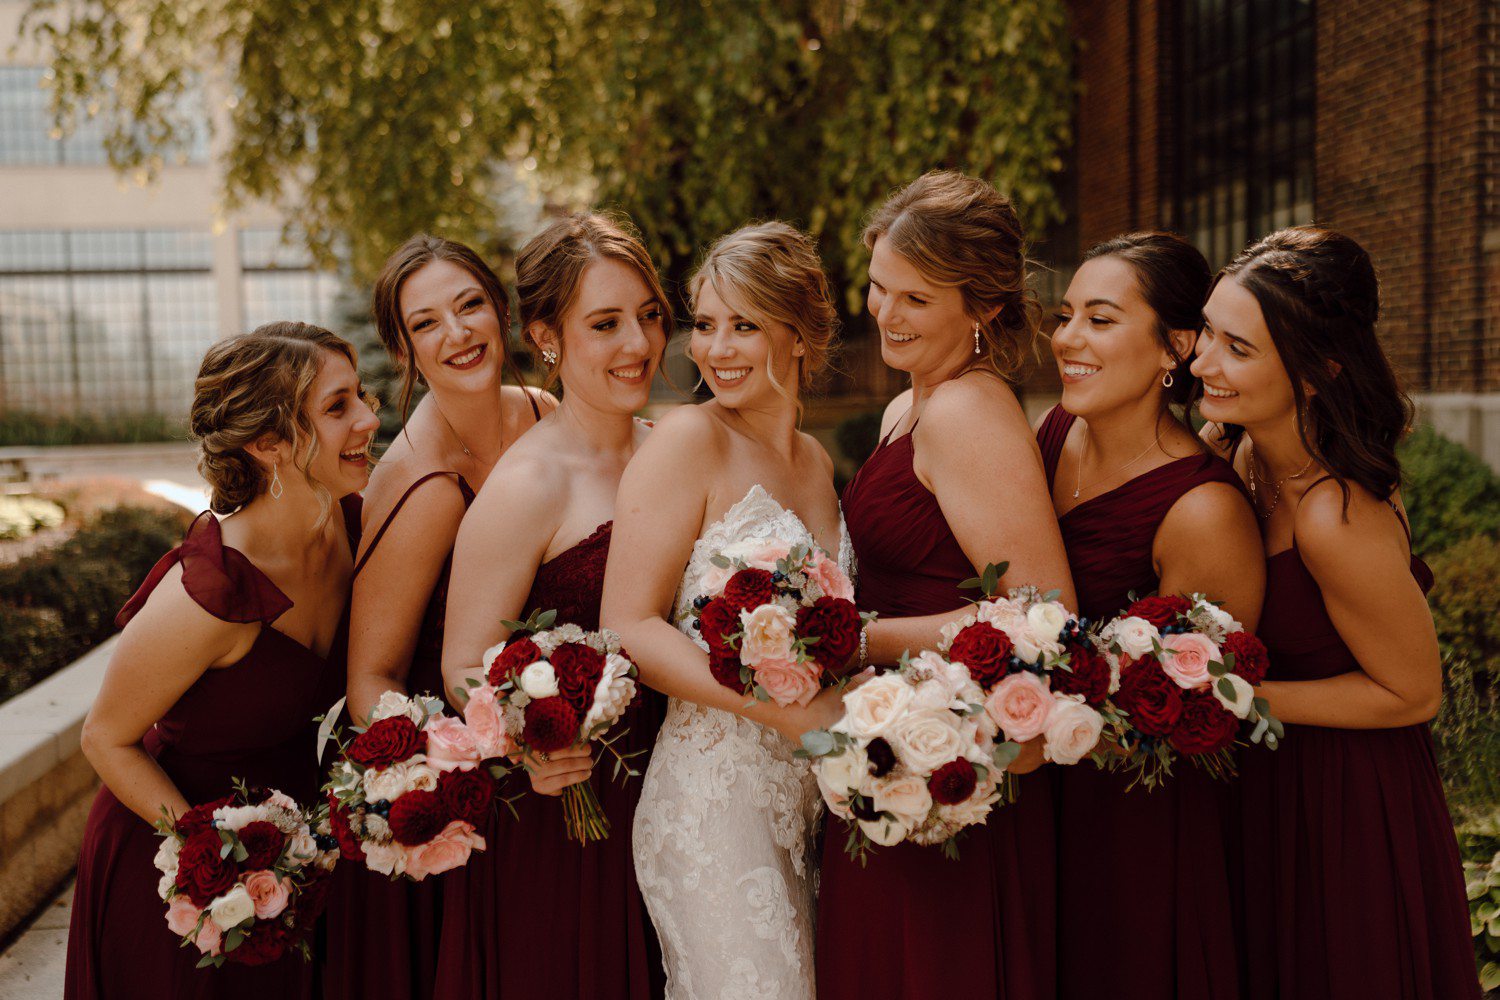 Bride with Bridesmaids in maroon dresses